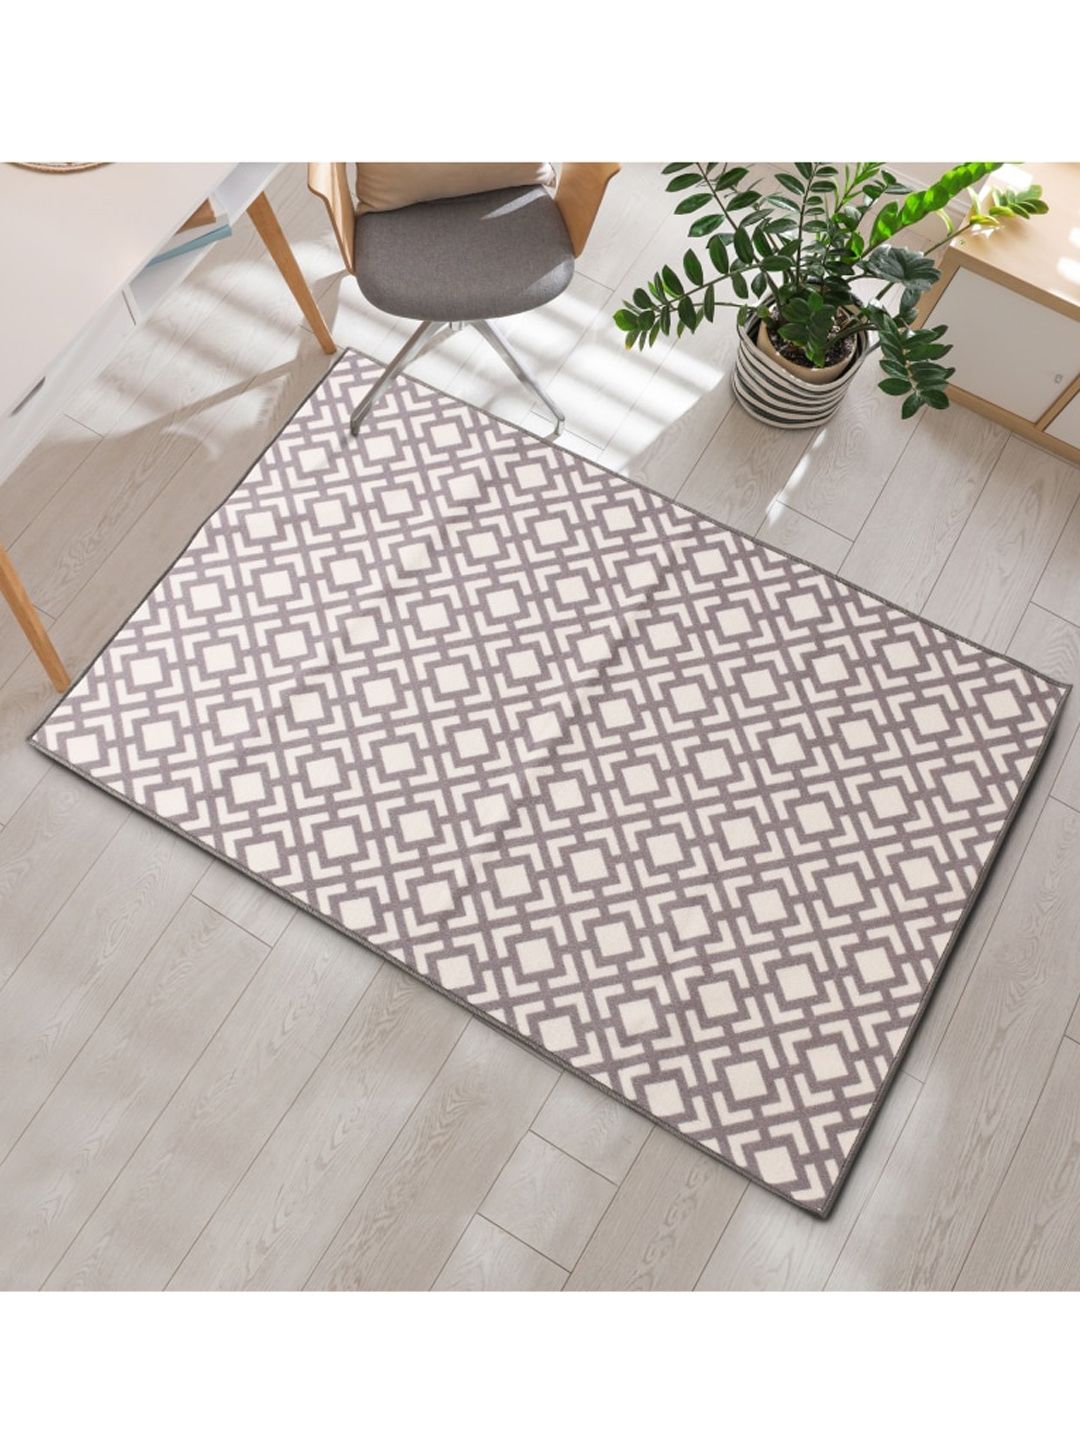 URBAN SPACE Grey & Off White Geometric Printed Anti-Skid Carpet Price in India